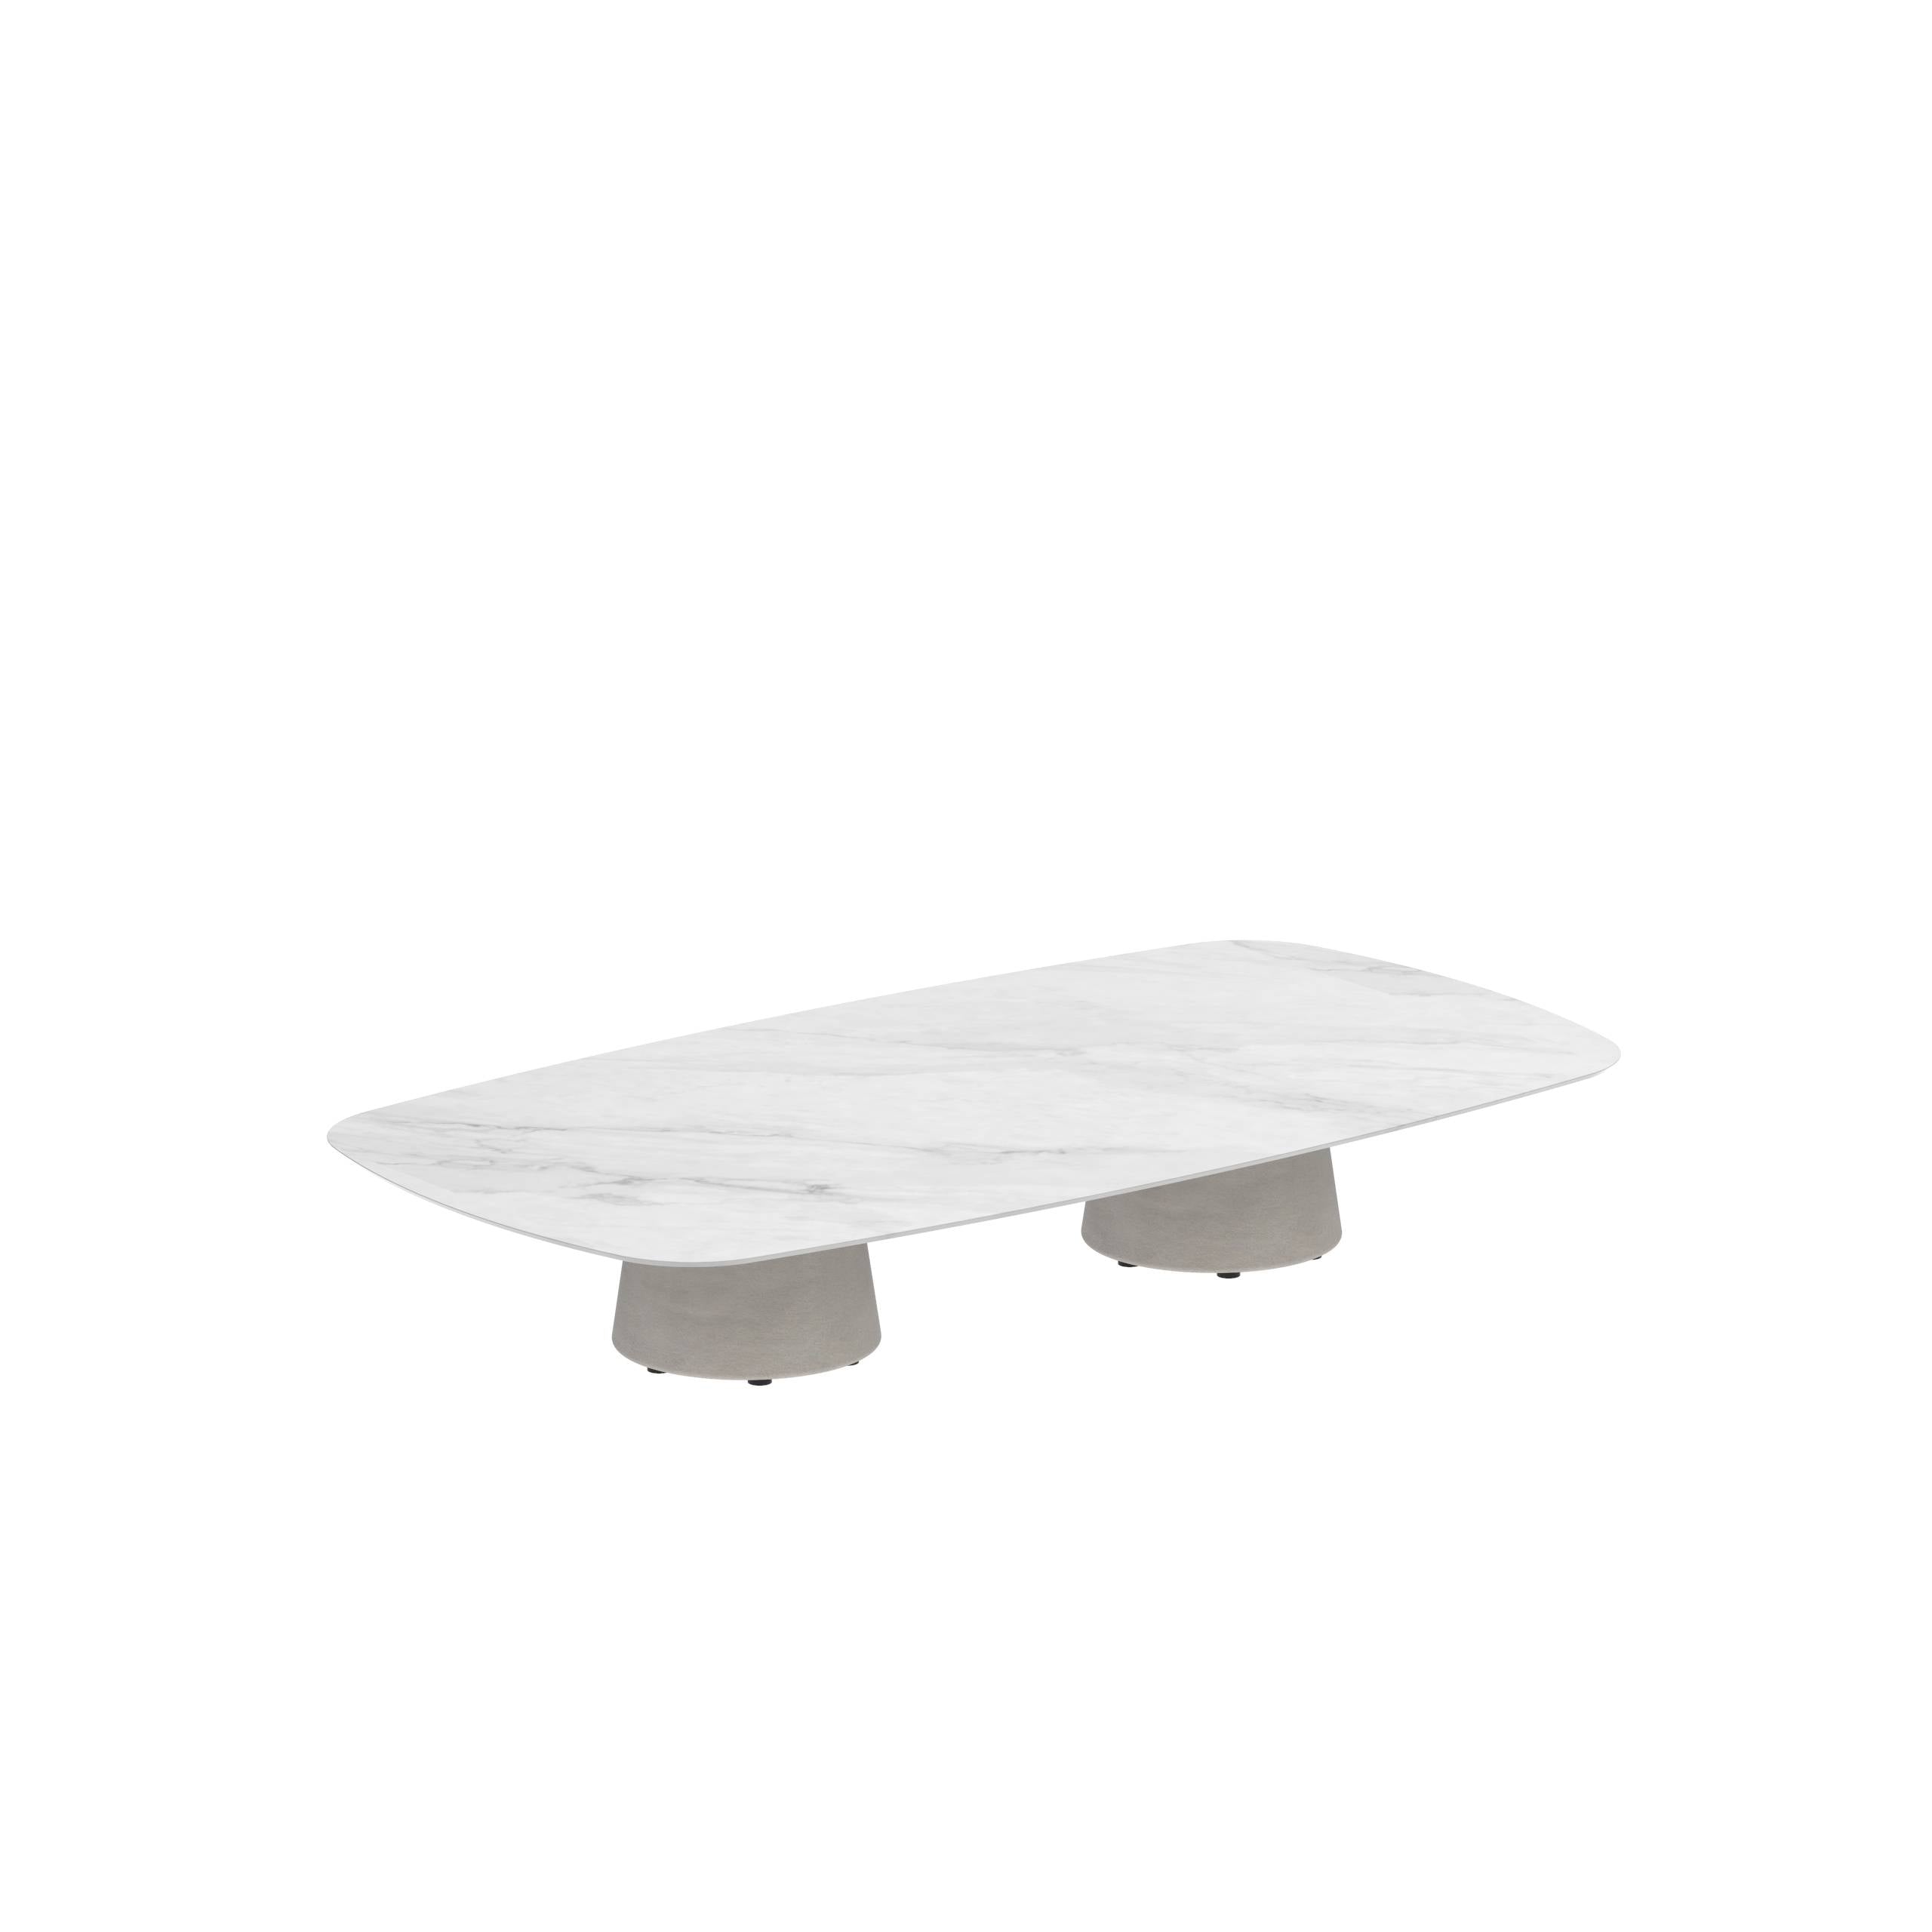 Conix Table 220x120 Cm Low Lounge Legs Concrete Cement Grey - Table Top Ceramic Bianco Statuario